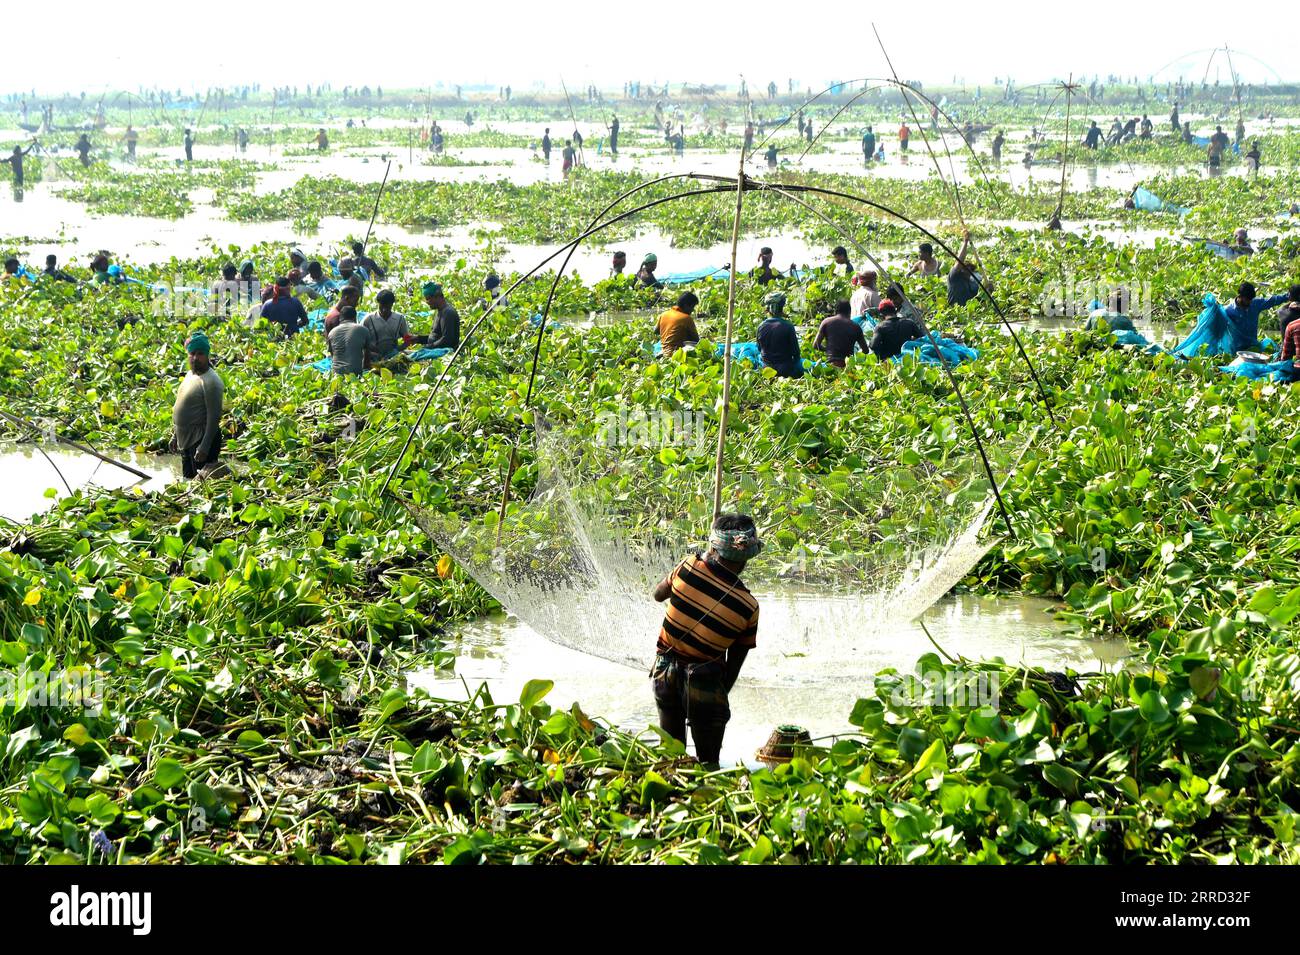 211129 -- PABNA, 29. November 2021 -- Menschen fangen am 27. November 2021 in Pabna, Bangladesch, in einem Sumpfland mit großem Netz in der Hand Fisch. BANGLADESCH-PABNA-TRADITIONELLE FISCHJAGD Salim PUBLICATIONxNOTxINxCHN Stockfoto